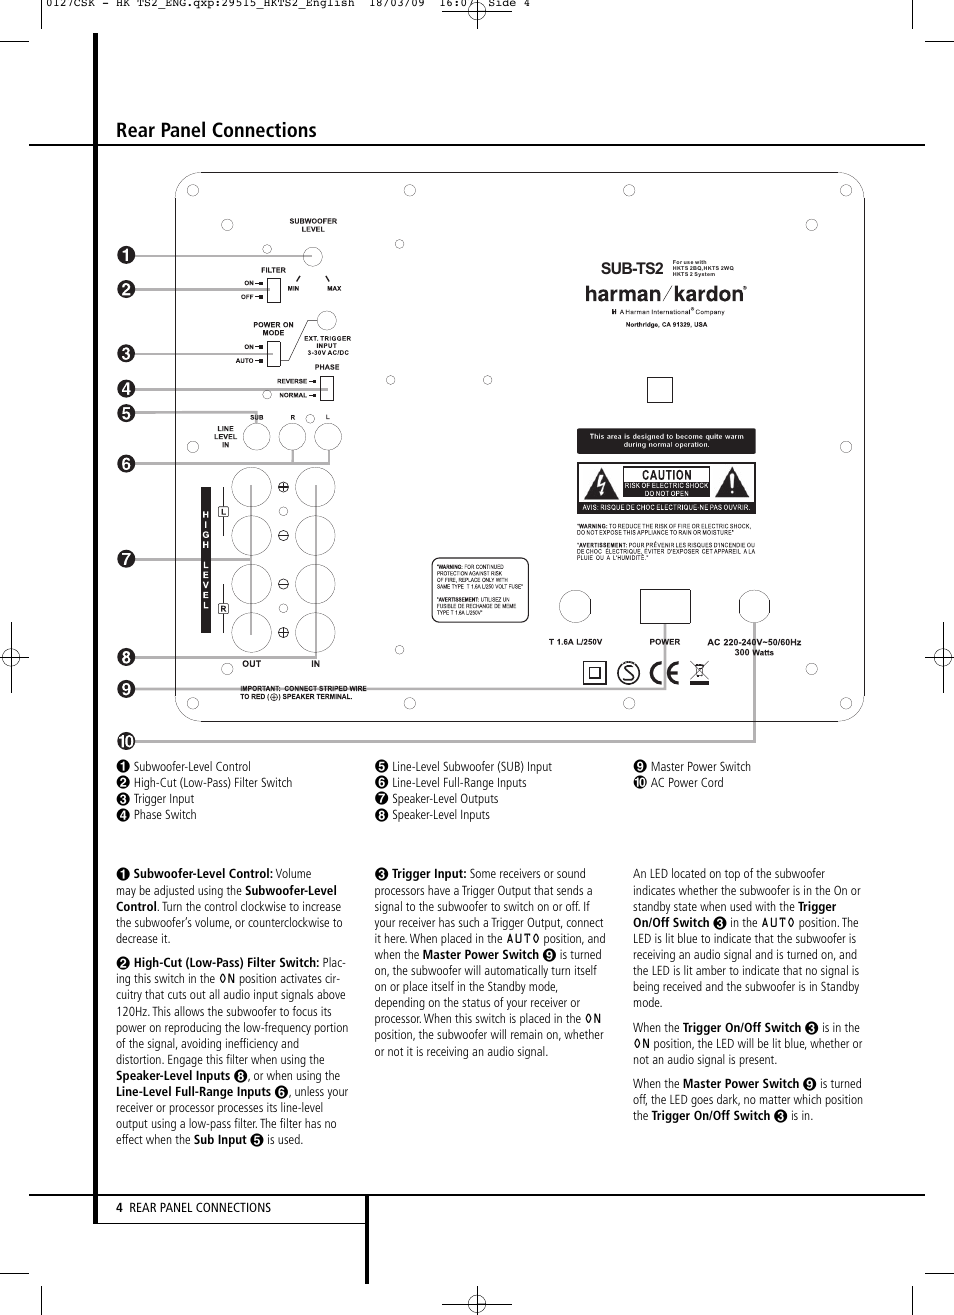 Rear panel connections, Sub-ts2 | Harman-Kardon HKTS 2 User Manual | Page 4  / 16